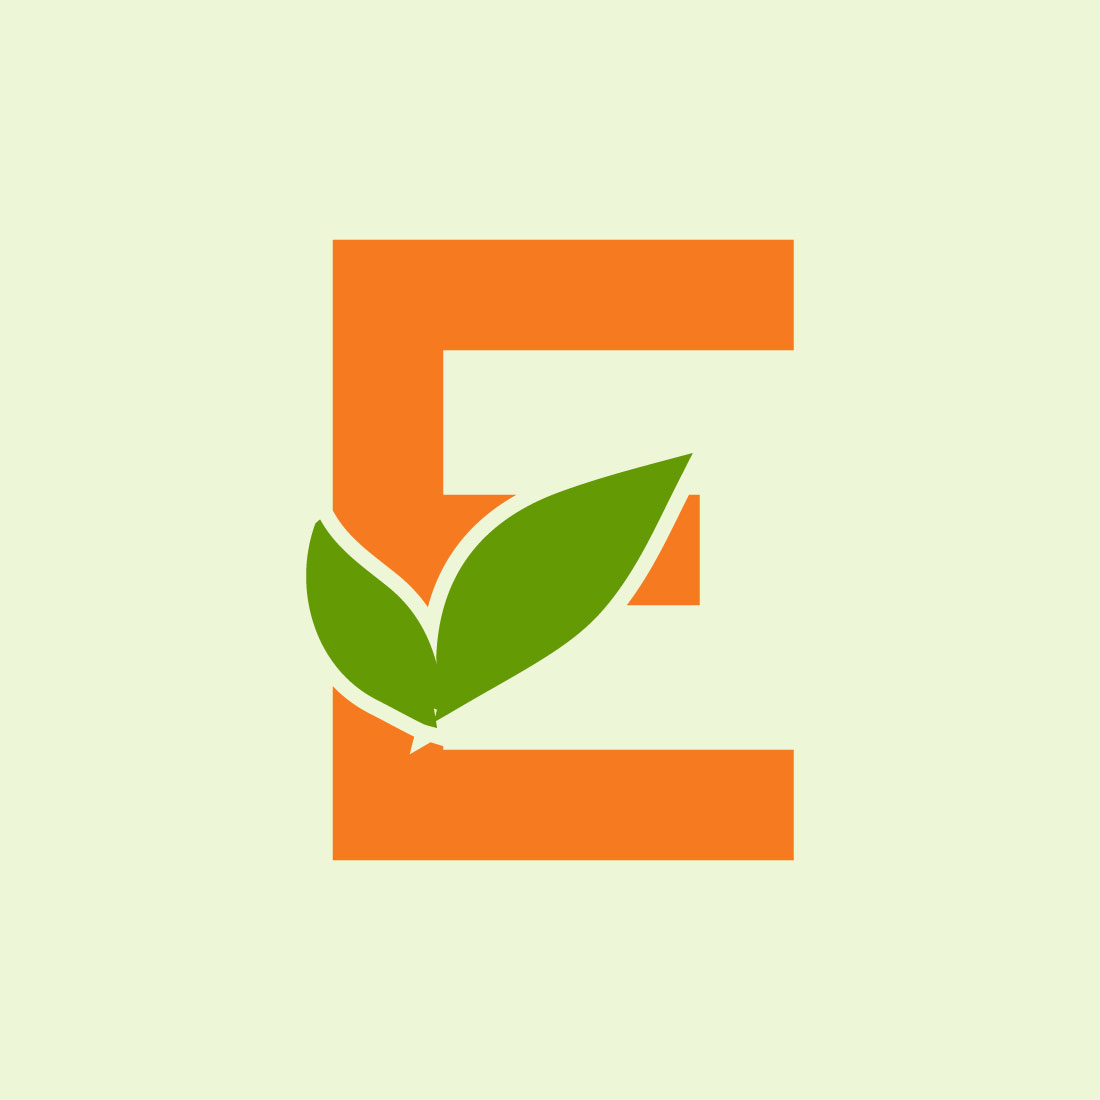 Free E floral logo cover image.